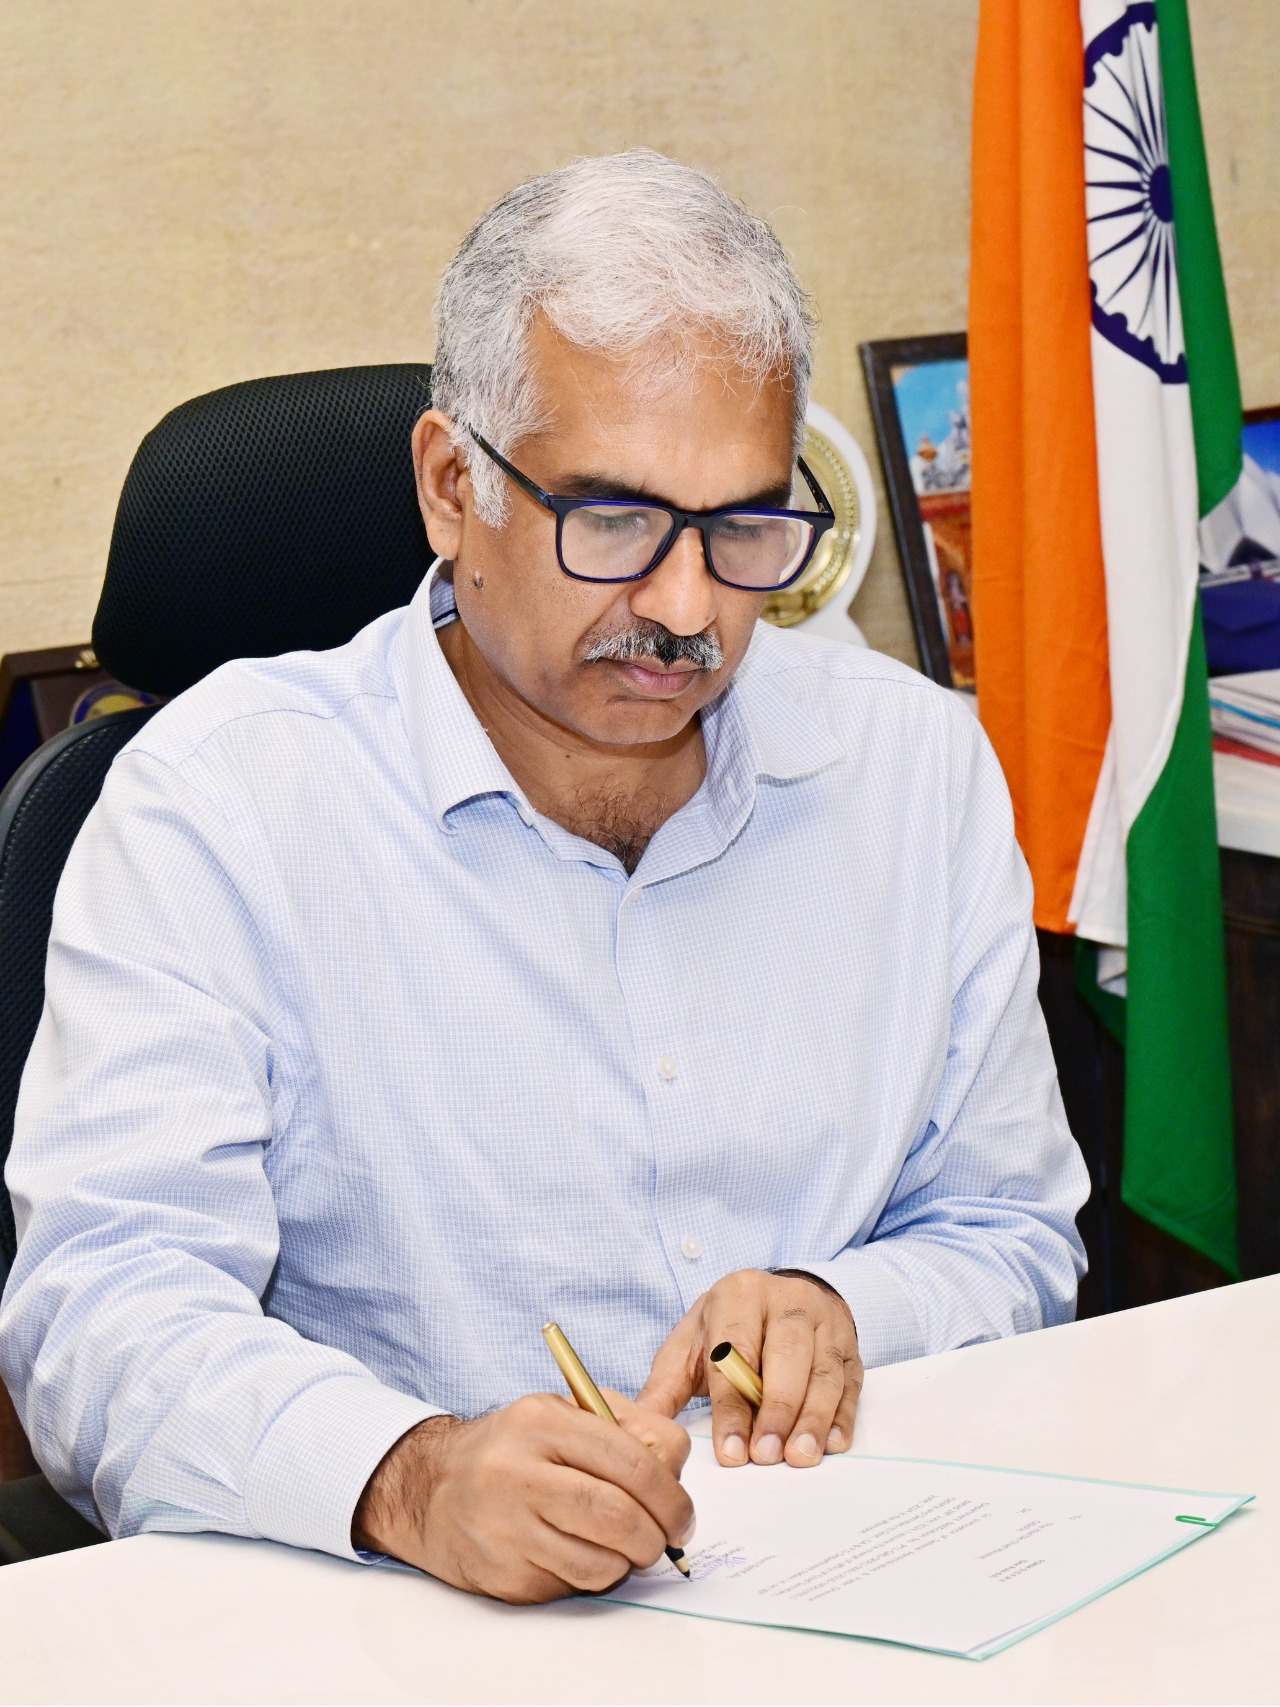 Sr. IAS officer Manoj Ahuja appointed as Chief Secretary of Odisha